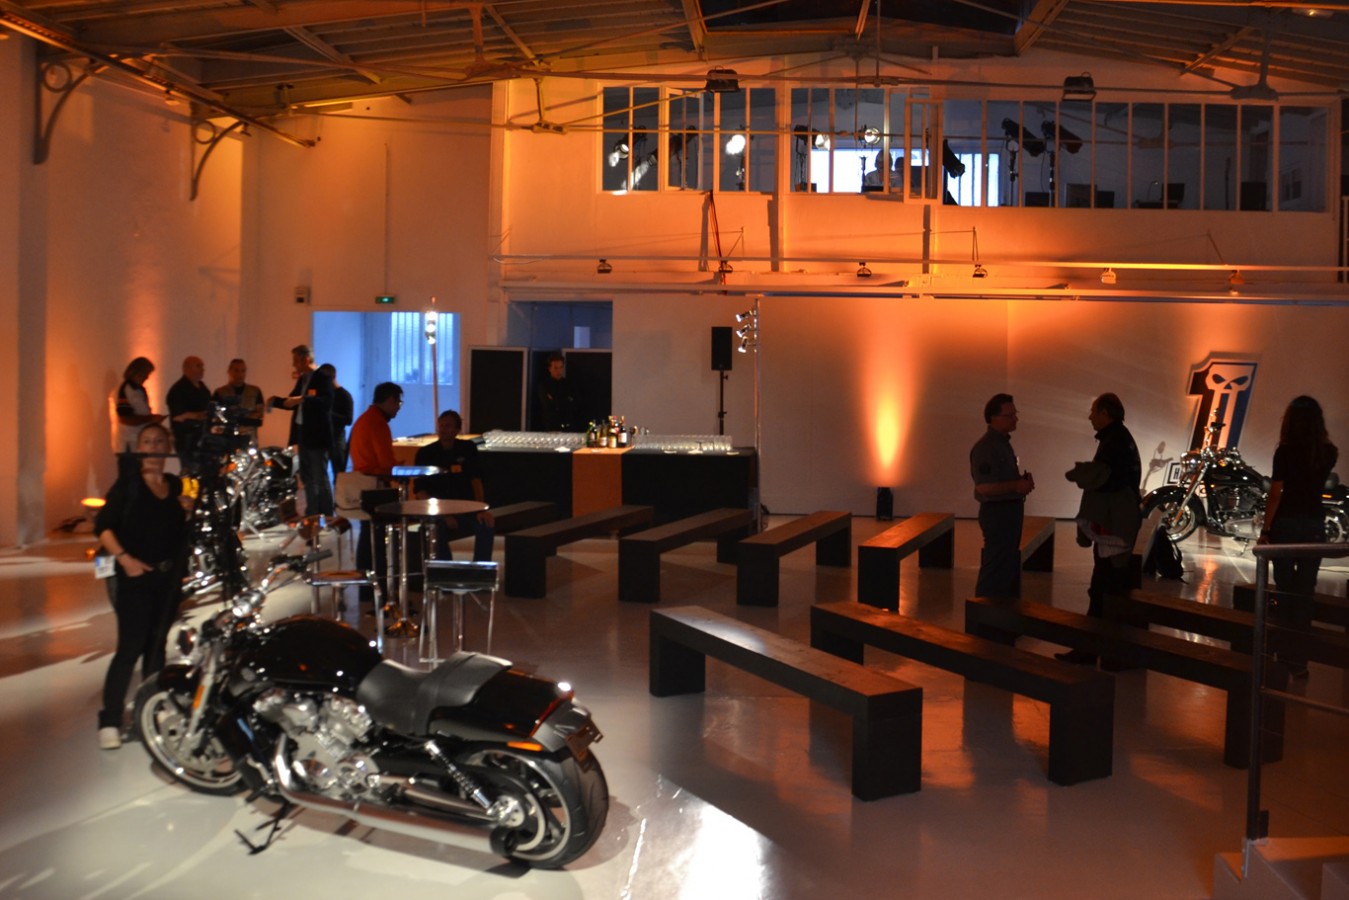 2011 - HarleyDavidson - Présentation nouveaux modèles - Agence HavasEvent